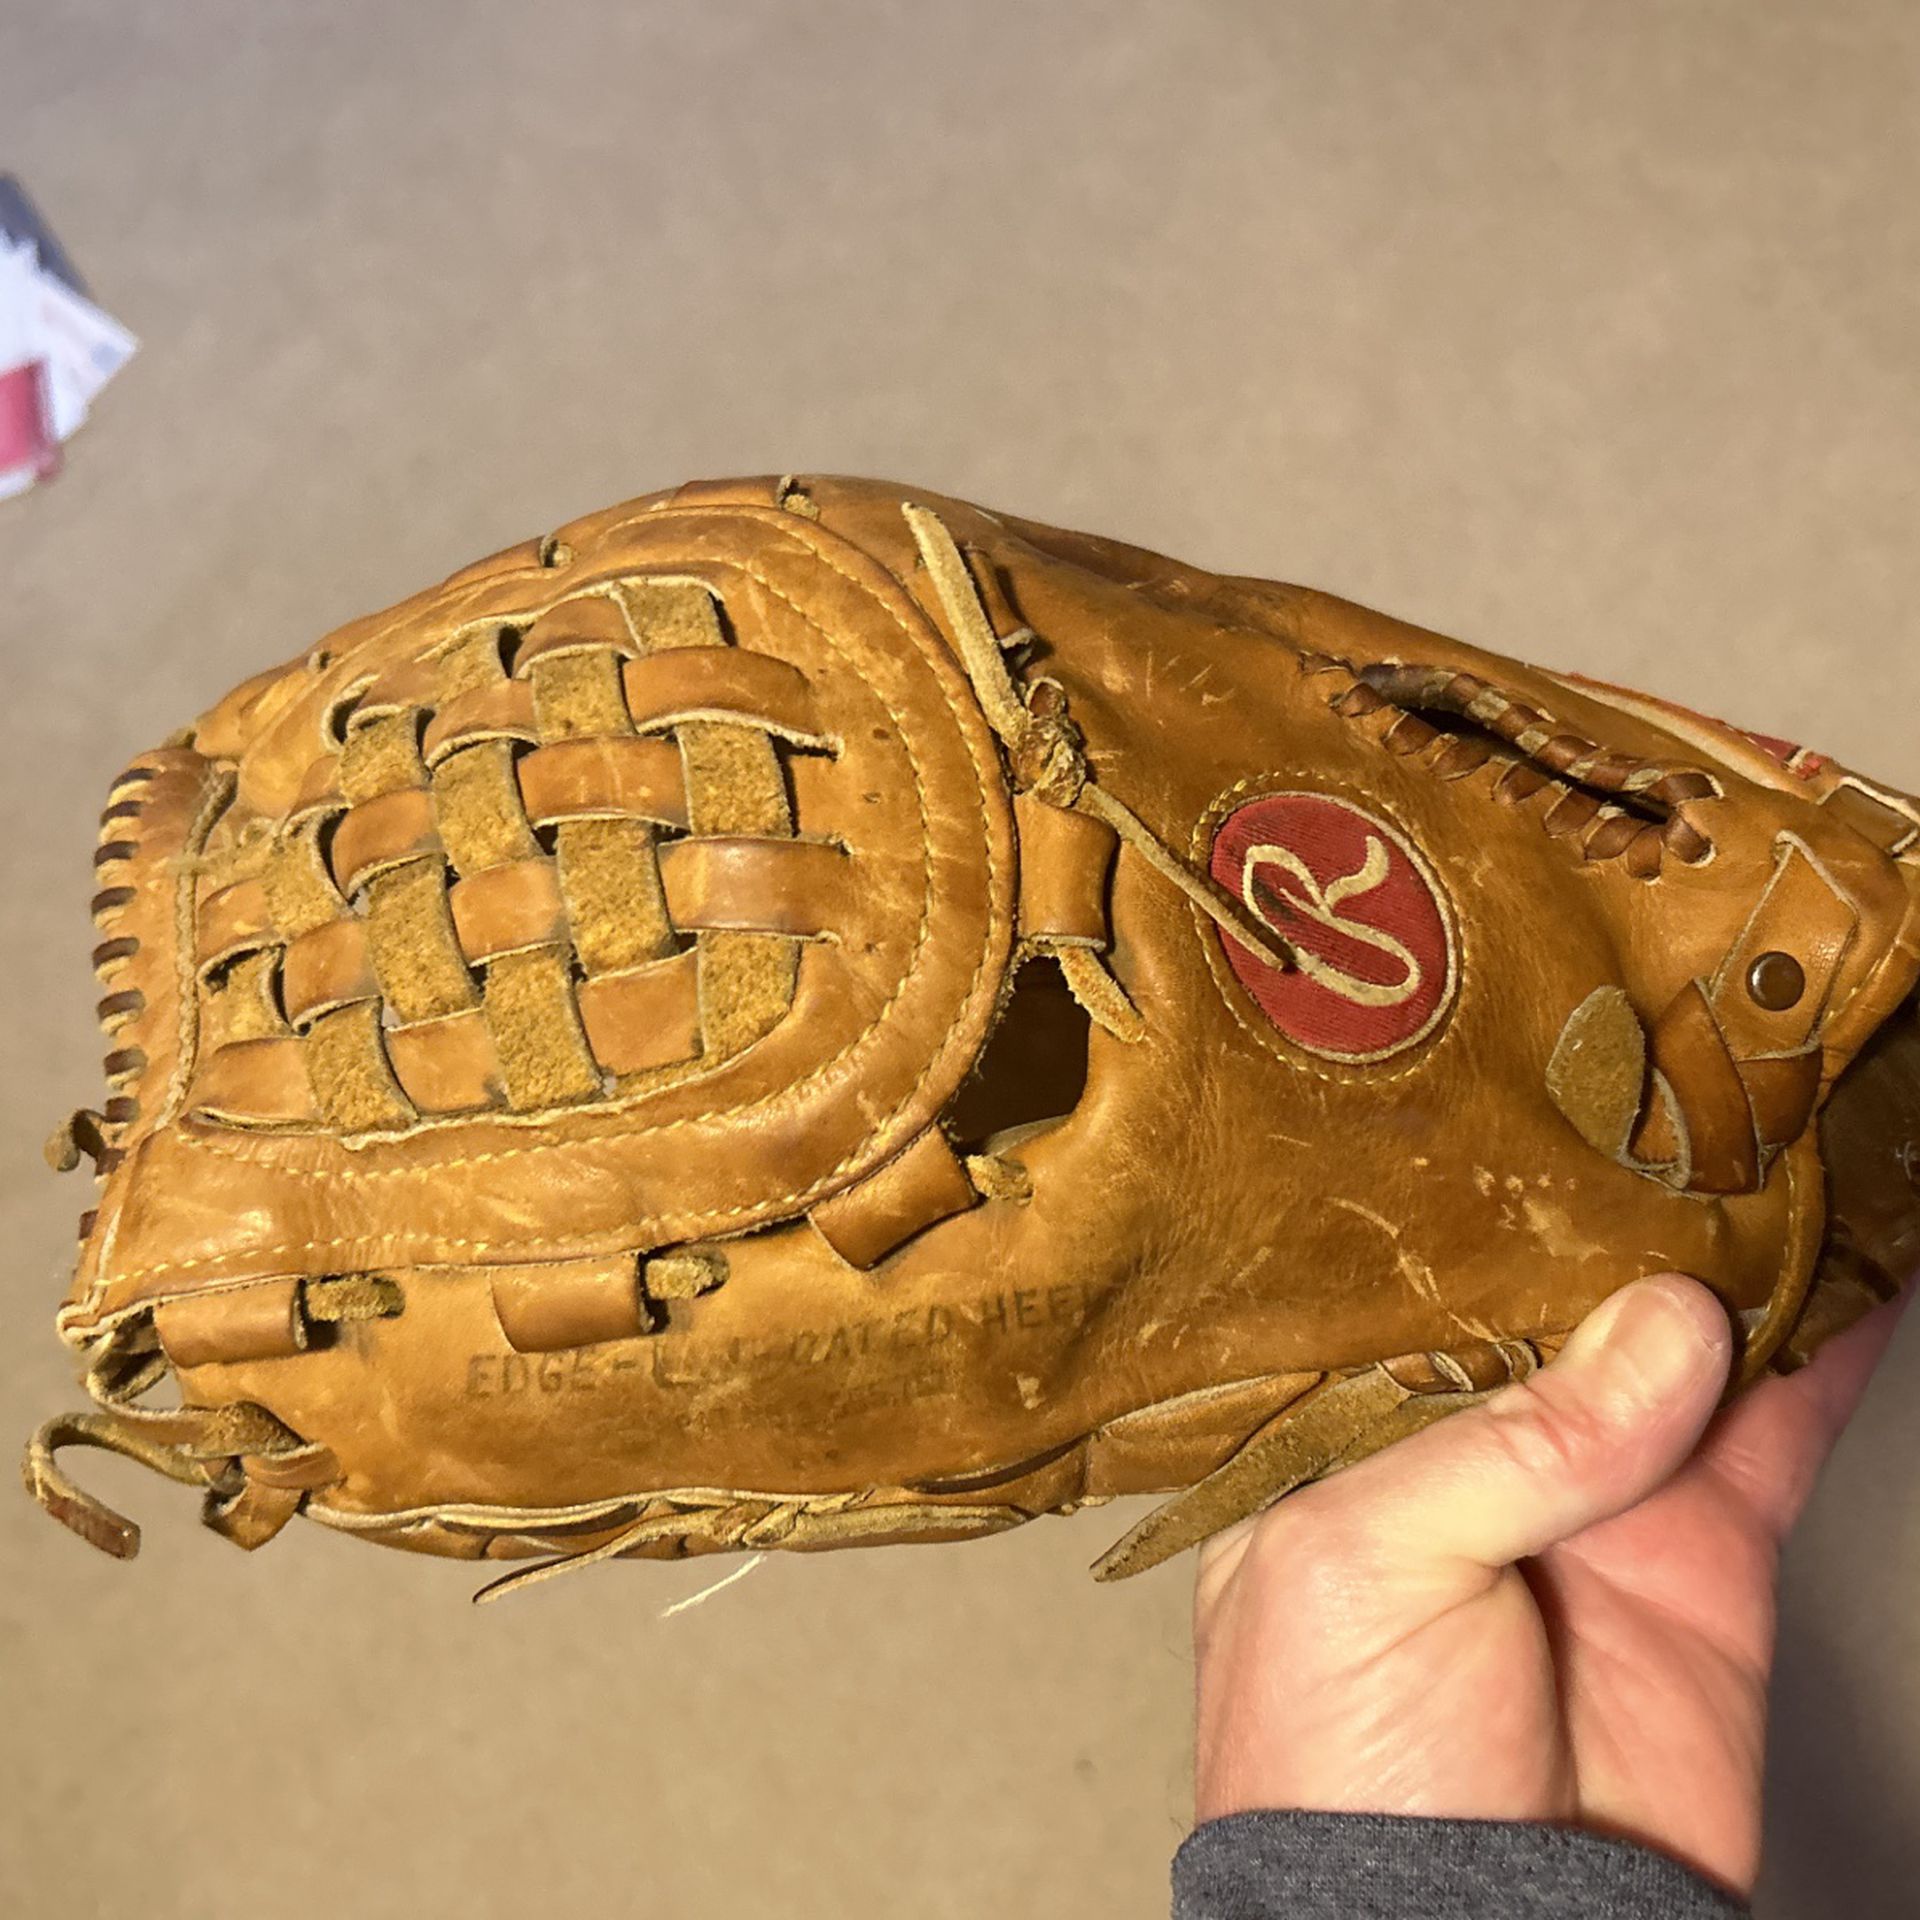 Rawlings/Reggie Jackson Baseball Glove For The Lefty